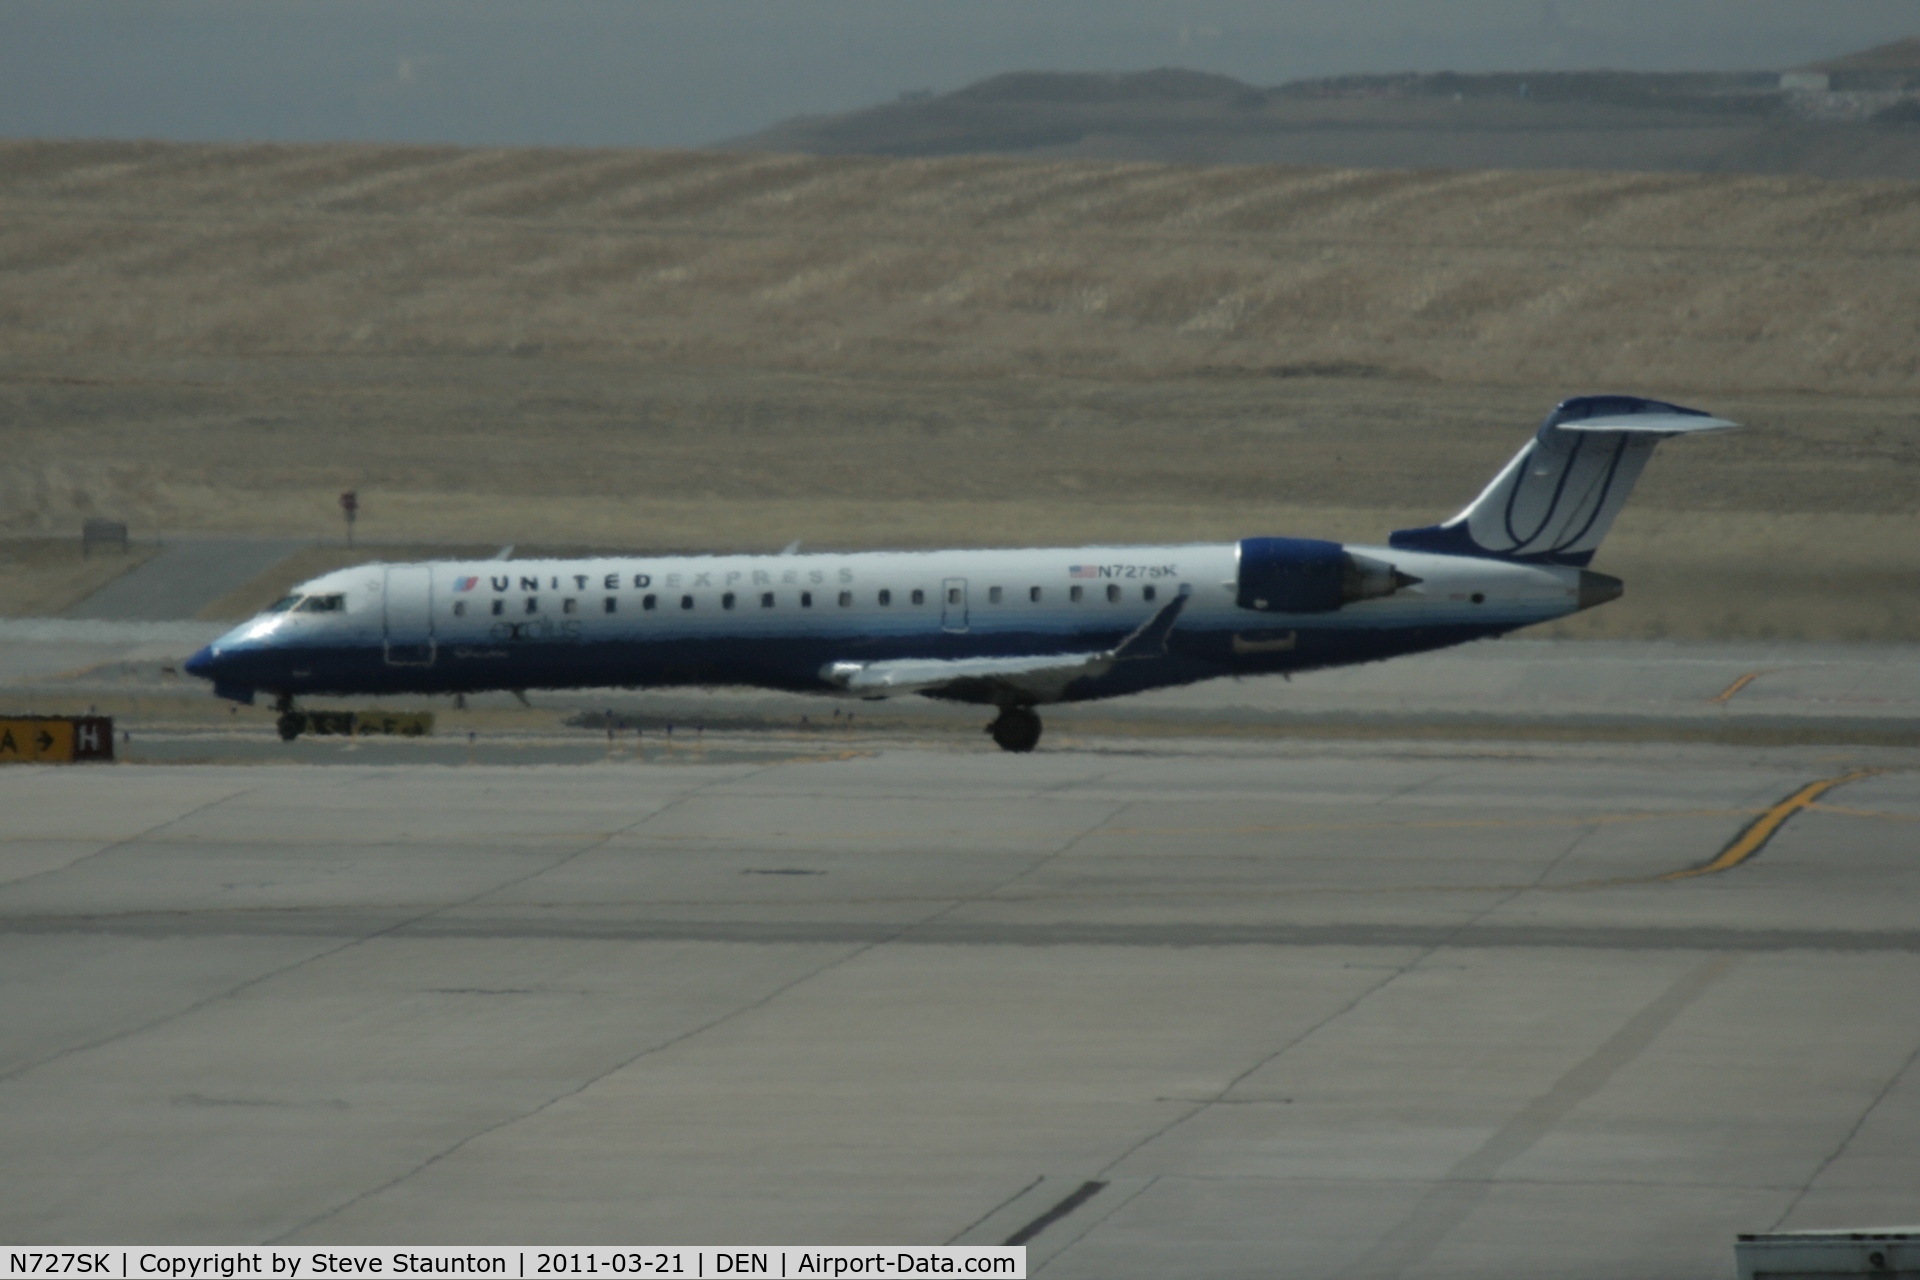 N727SK, 2005 Bombardier CRJ-701ER (CL-600-2C10) Regional Jet C/N 10191, Taken at Denver International Airport, in March 2011 whilst on an Aeroprint Aviation tour